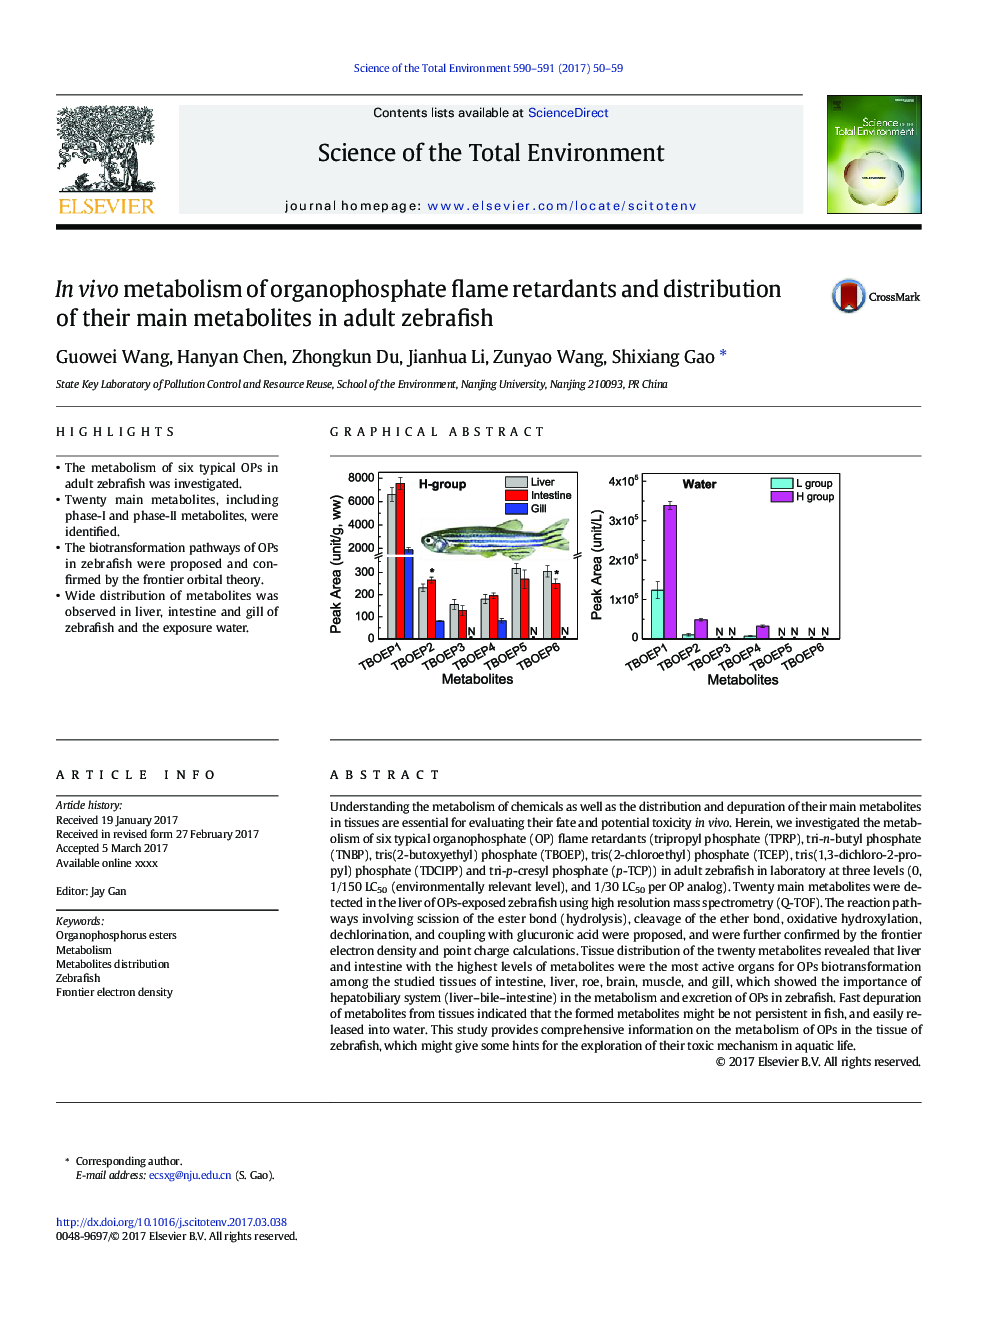 In vivo metabolism of organophosphate flame retardants and distribution of their main metabolites in adult zebrafish